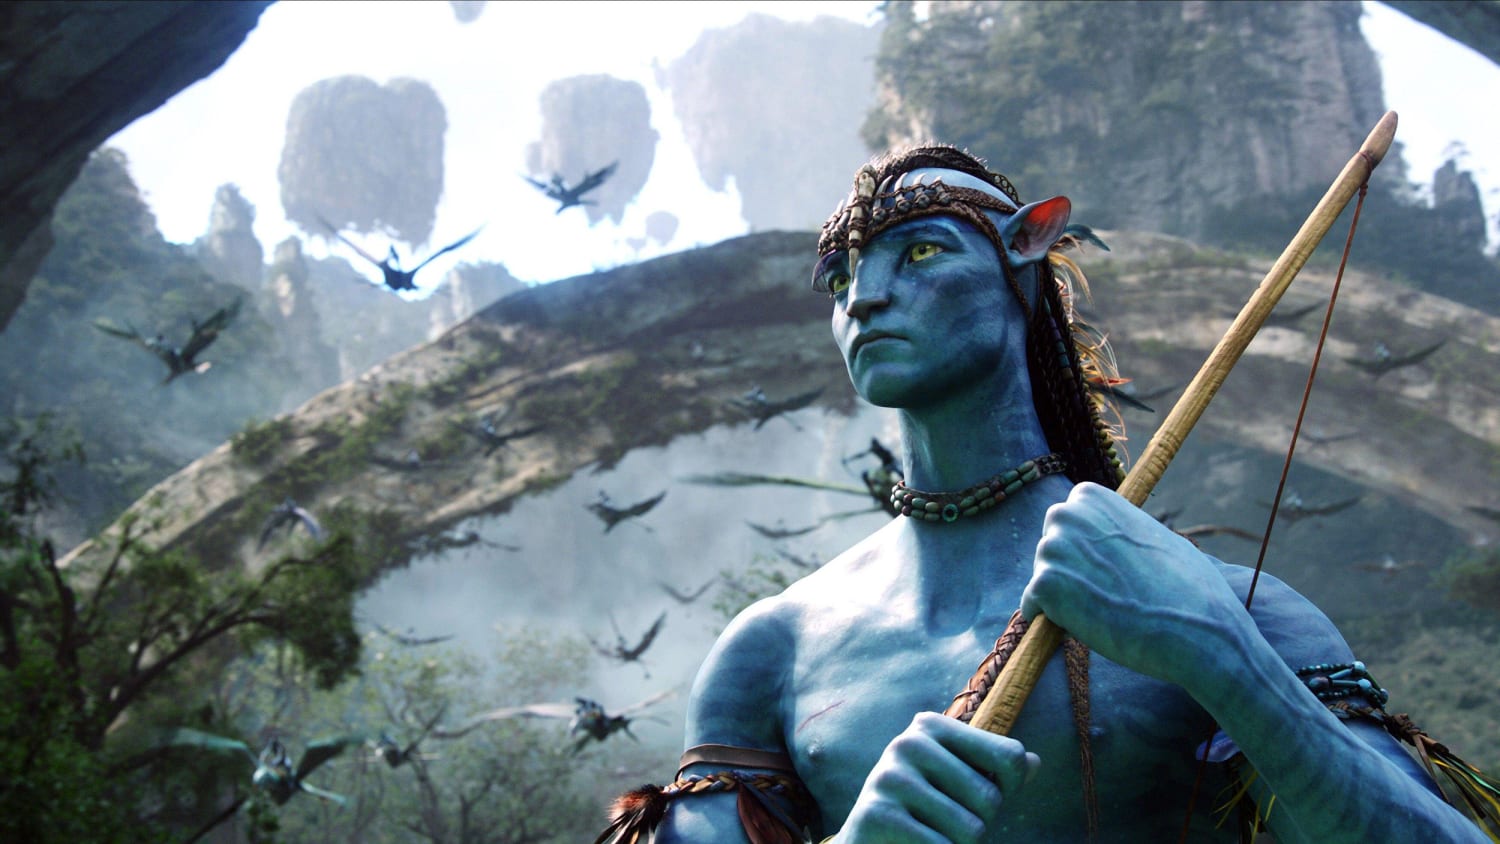 Avatar The Way Of Water Download FilmyZilla 300MB 700MB  Vijay Solutions